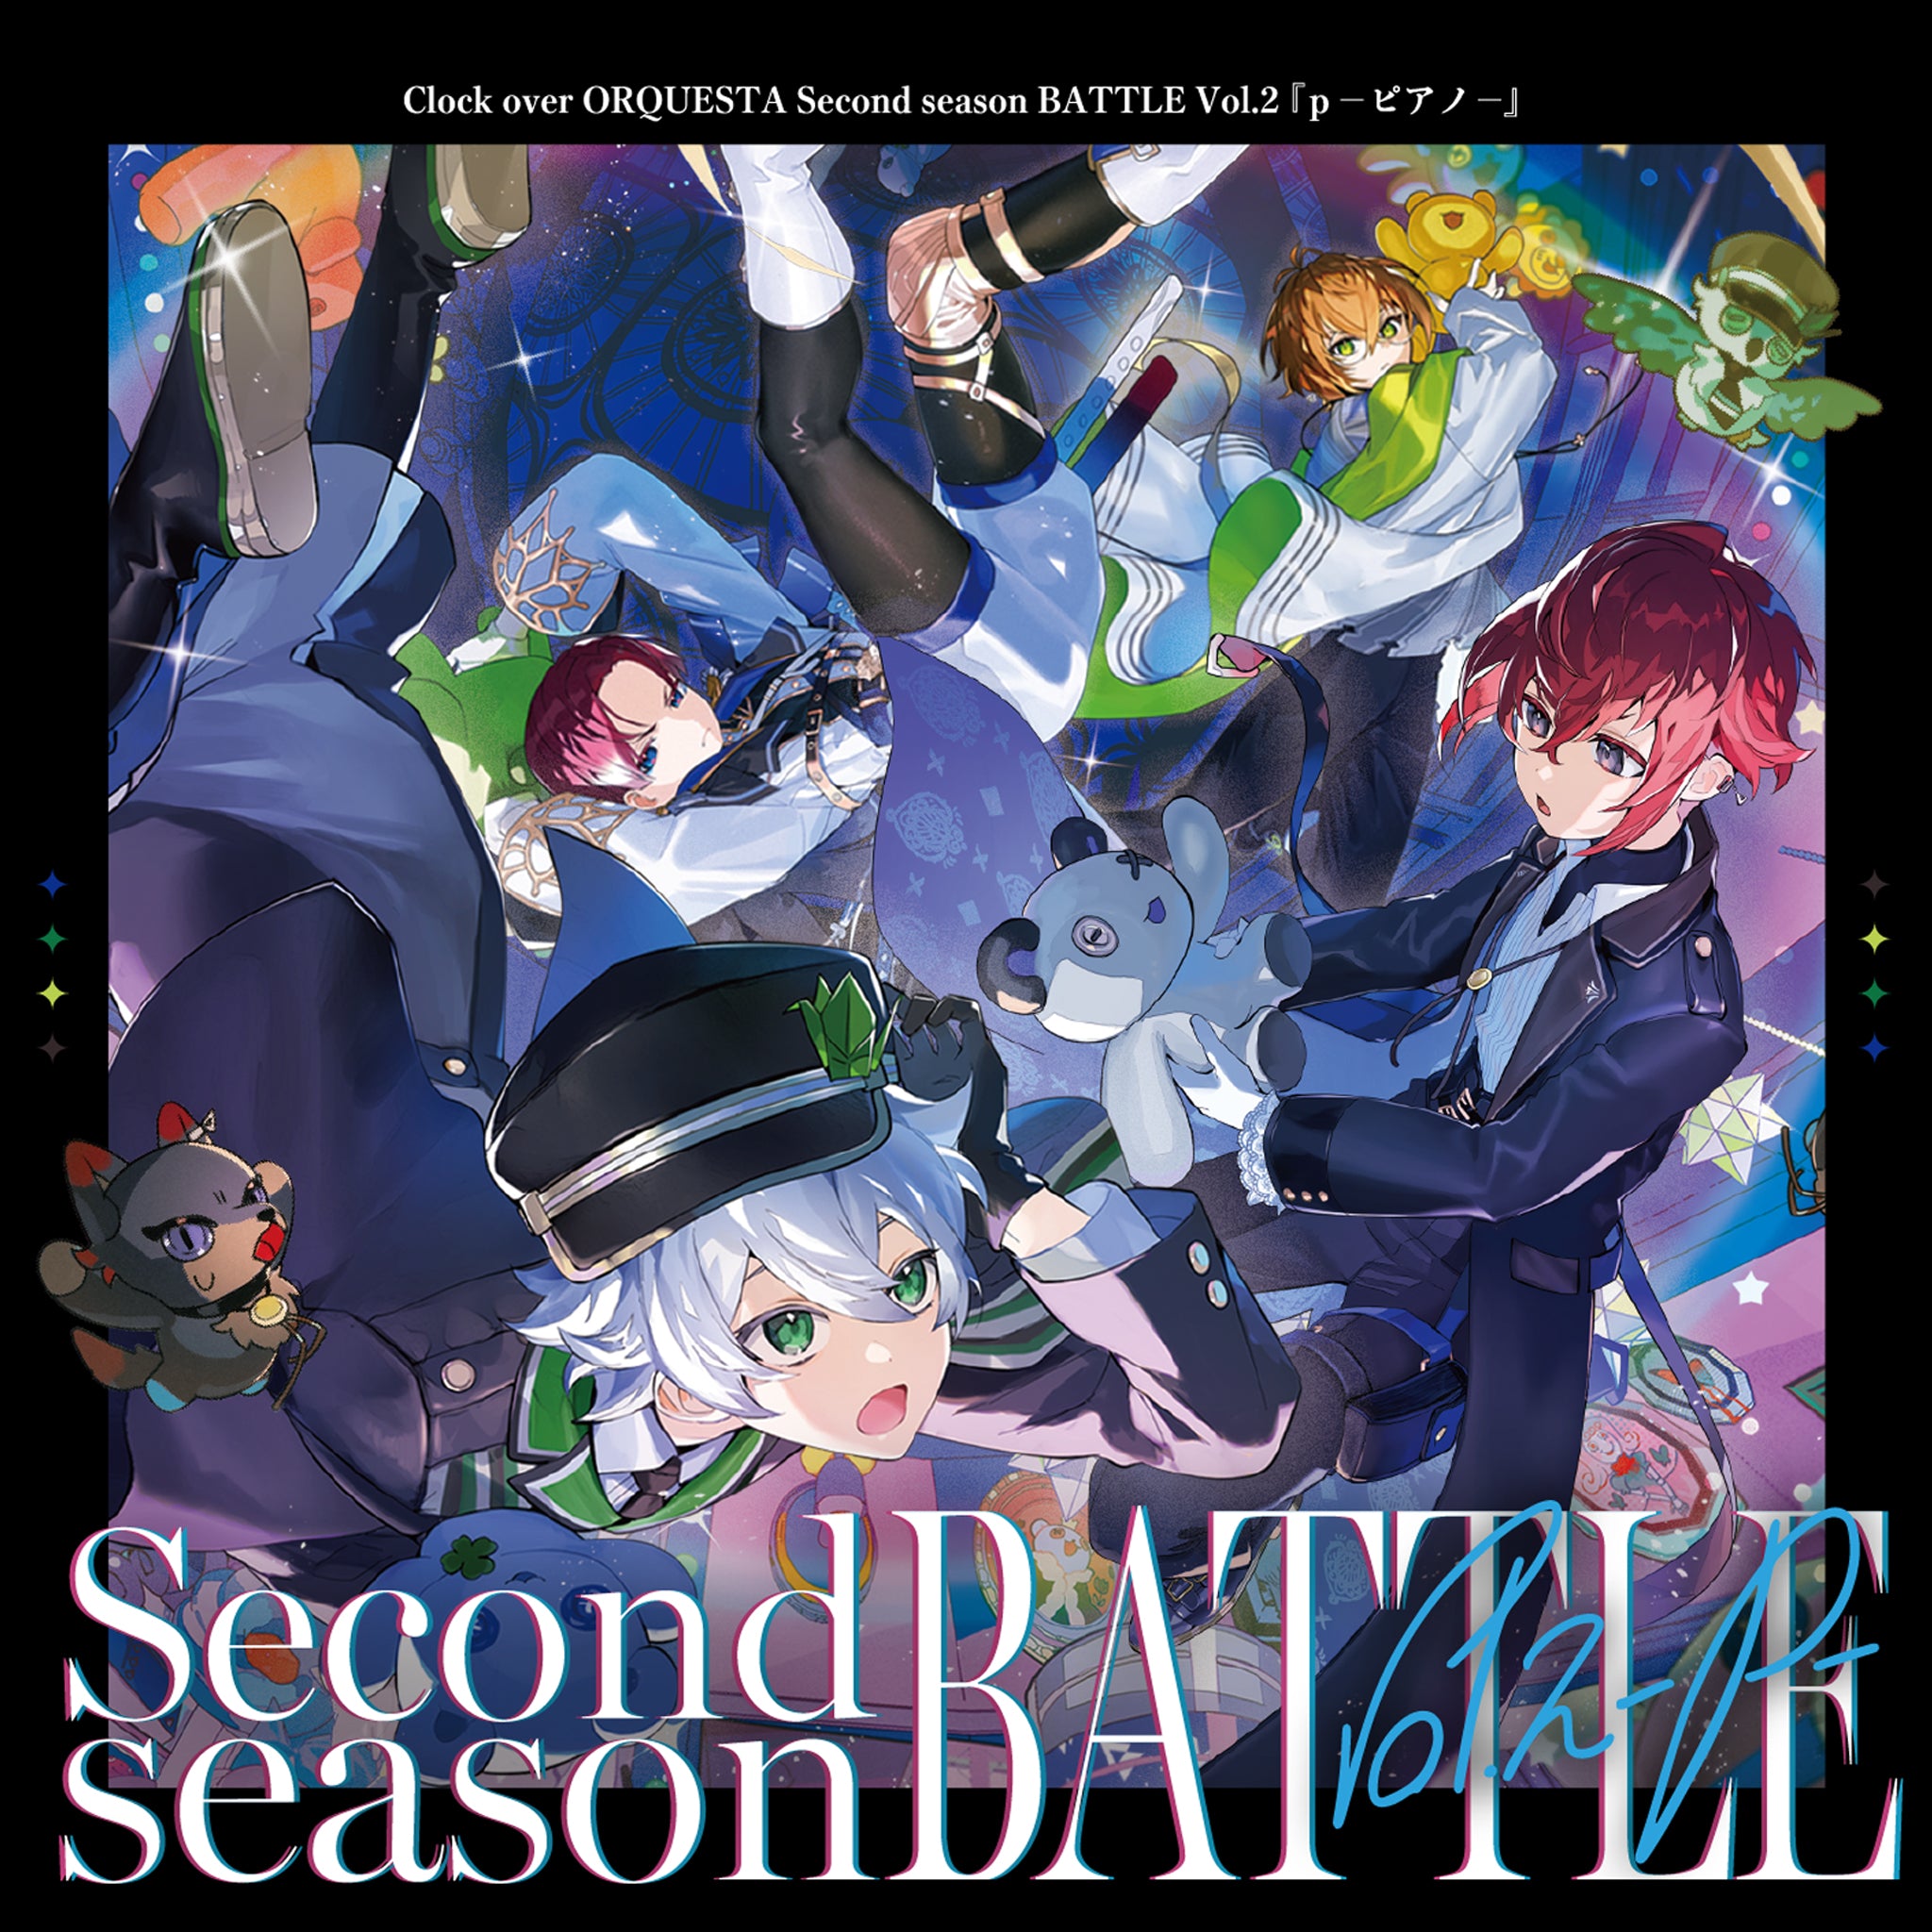 CD＋有償特典セット]Second season BATTLE Vol.2 『ｐ － ピアノ －』+ 